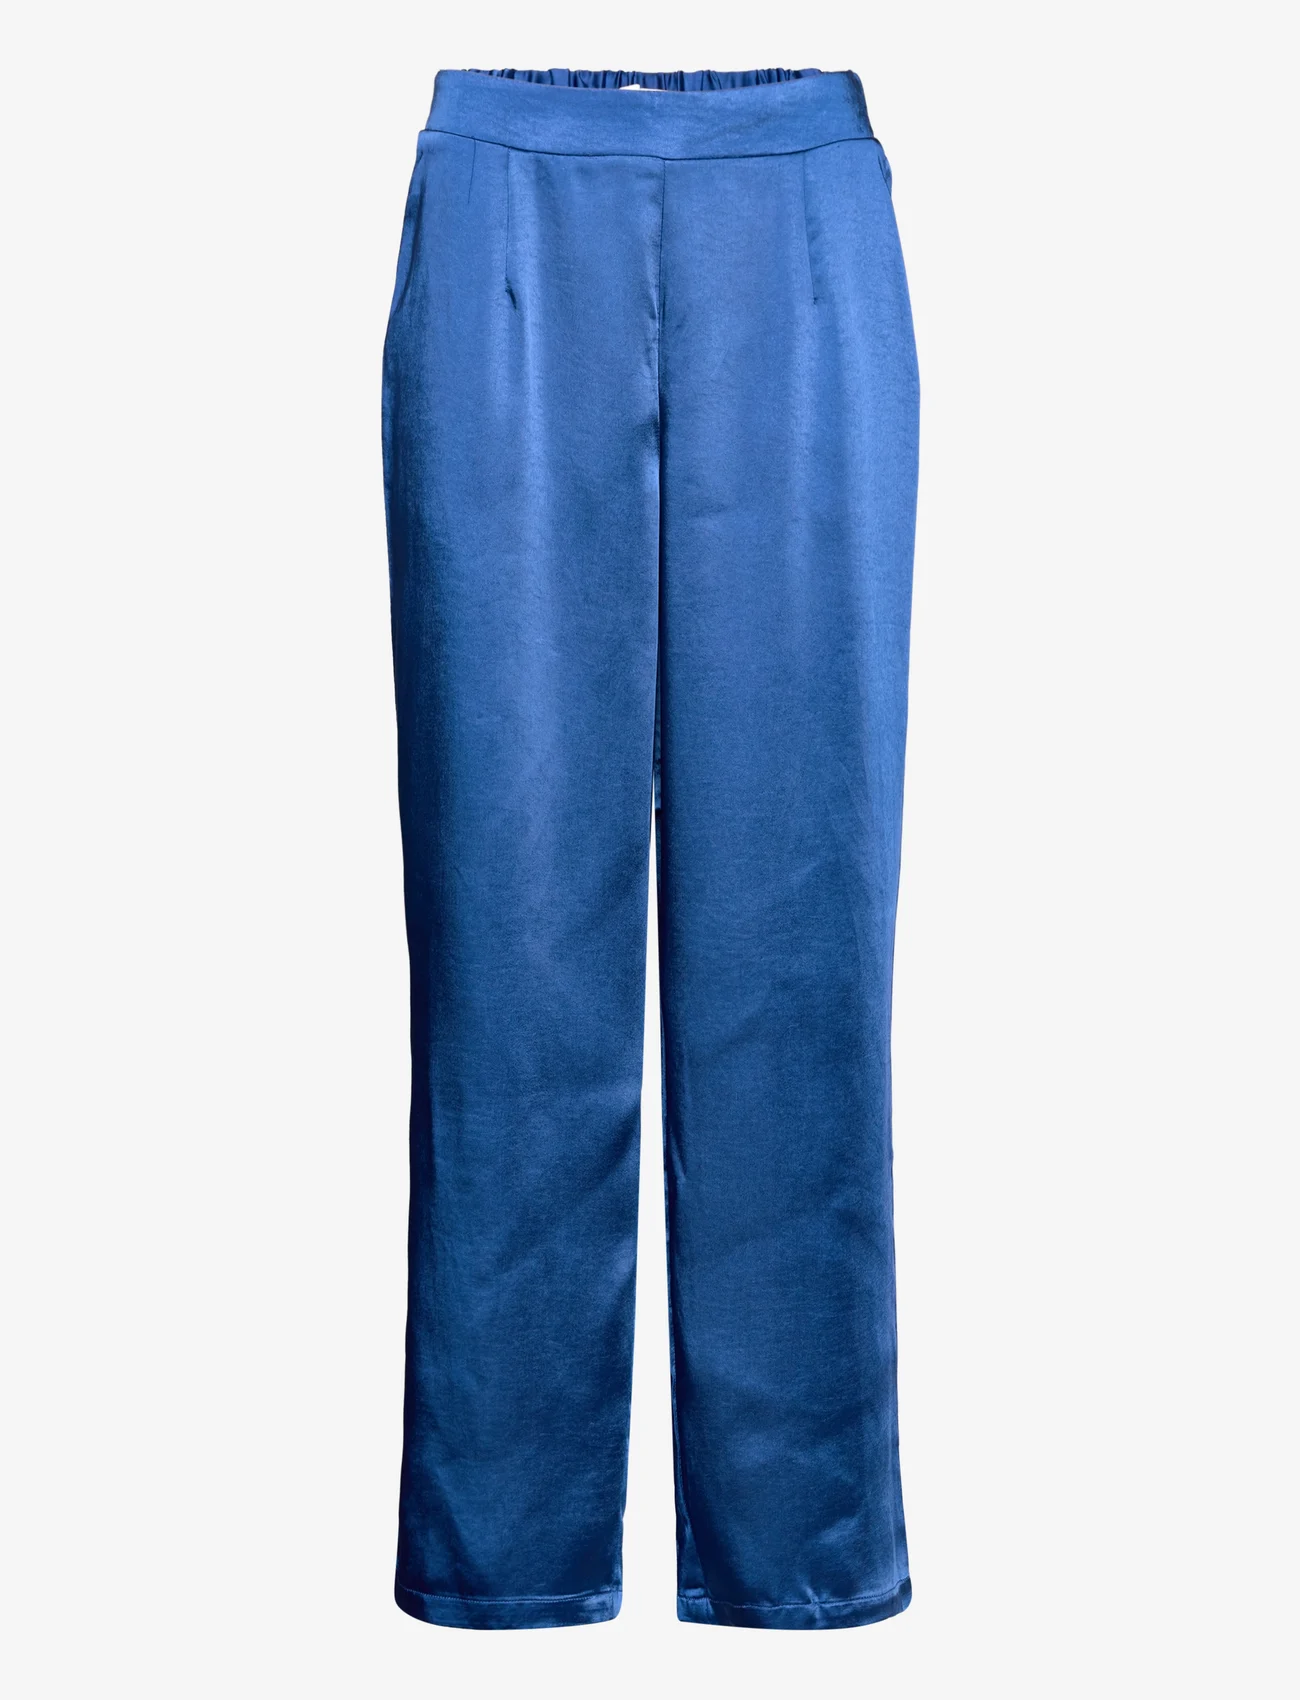 Lollys Laundry - Henry Pants - plačios kelnės - neon blue - 0